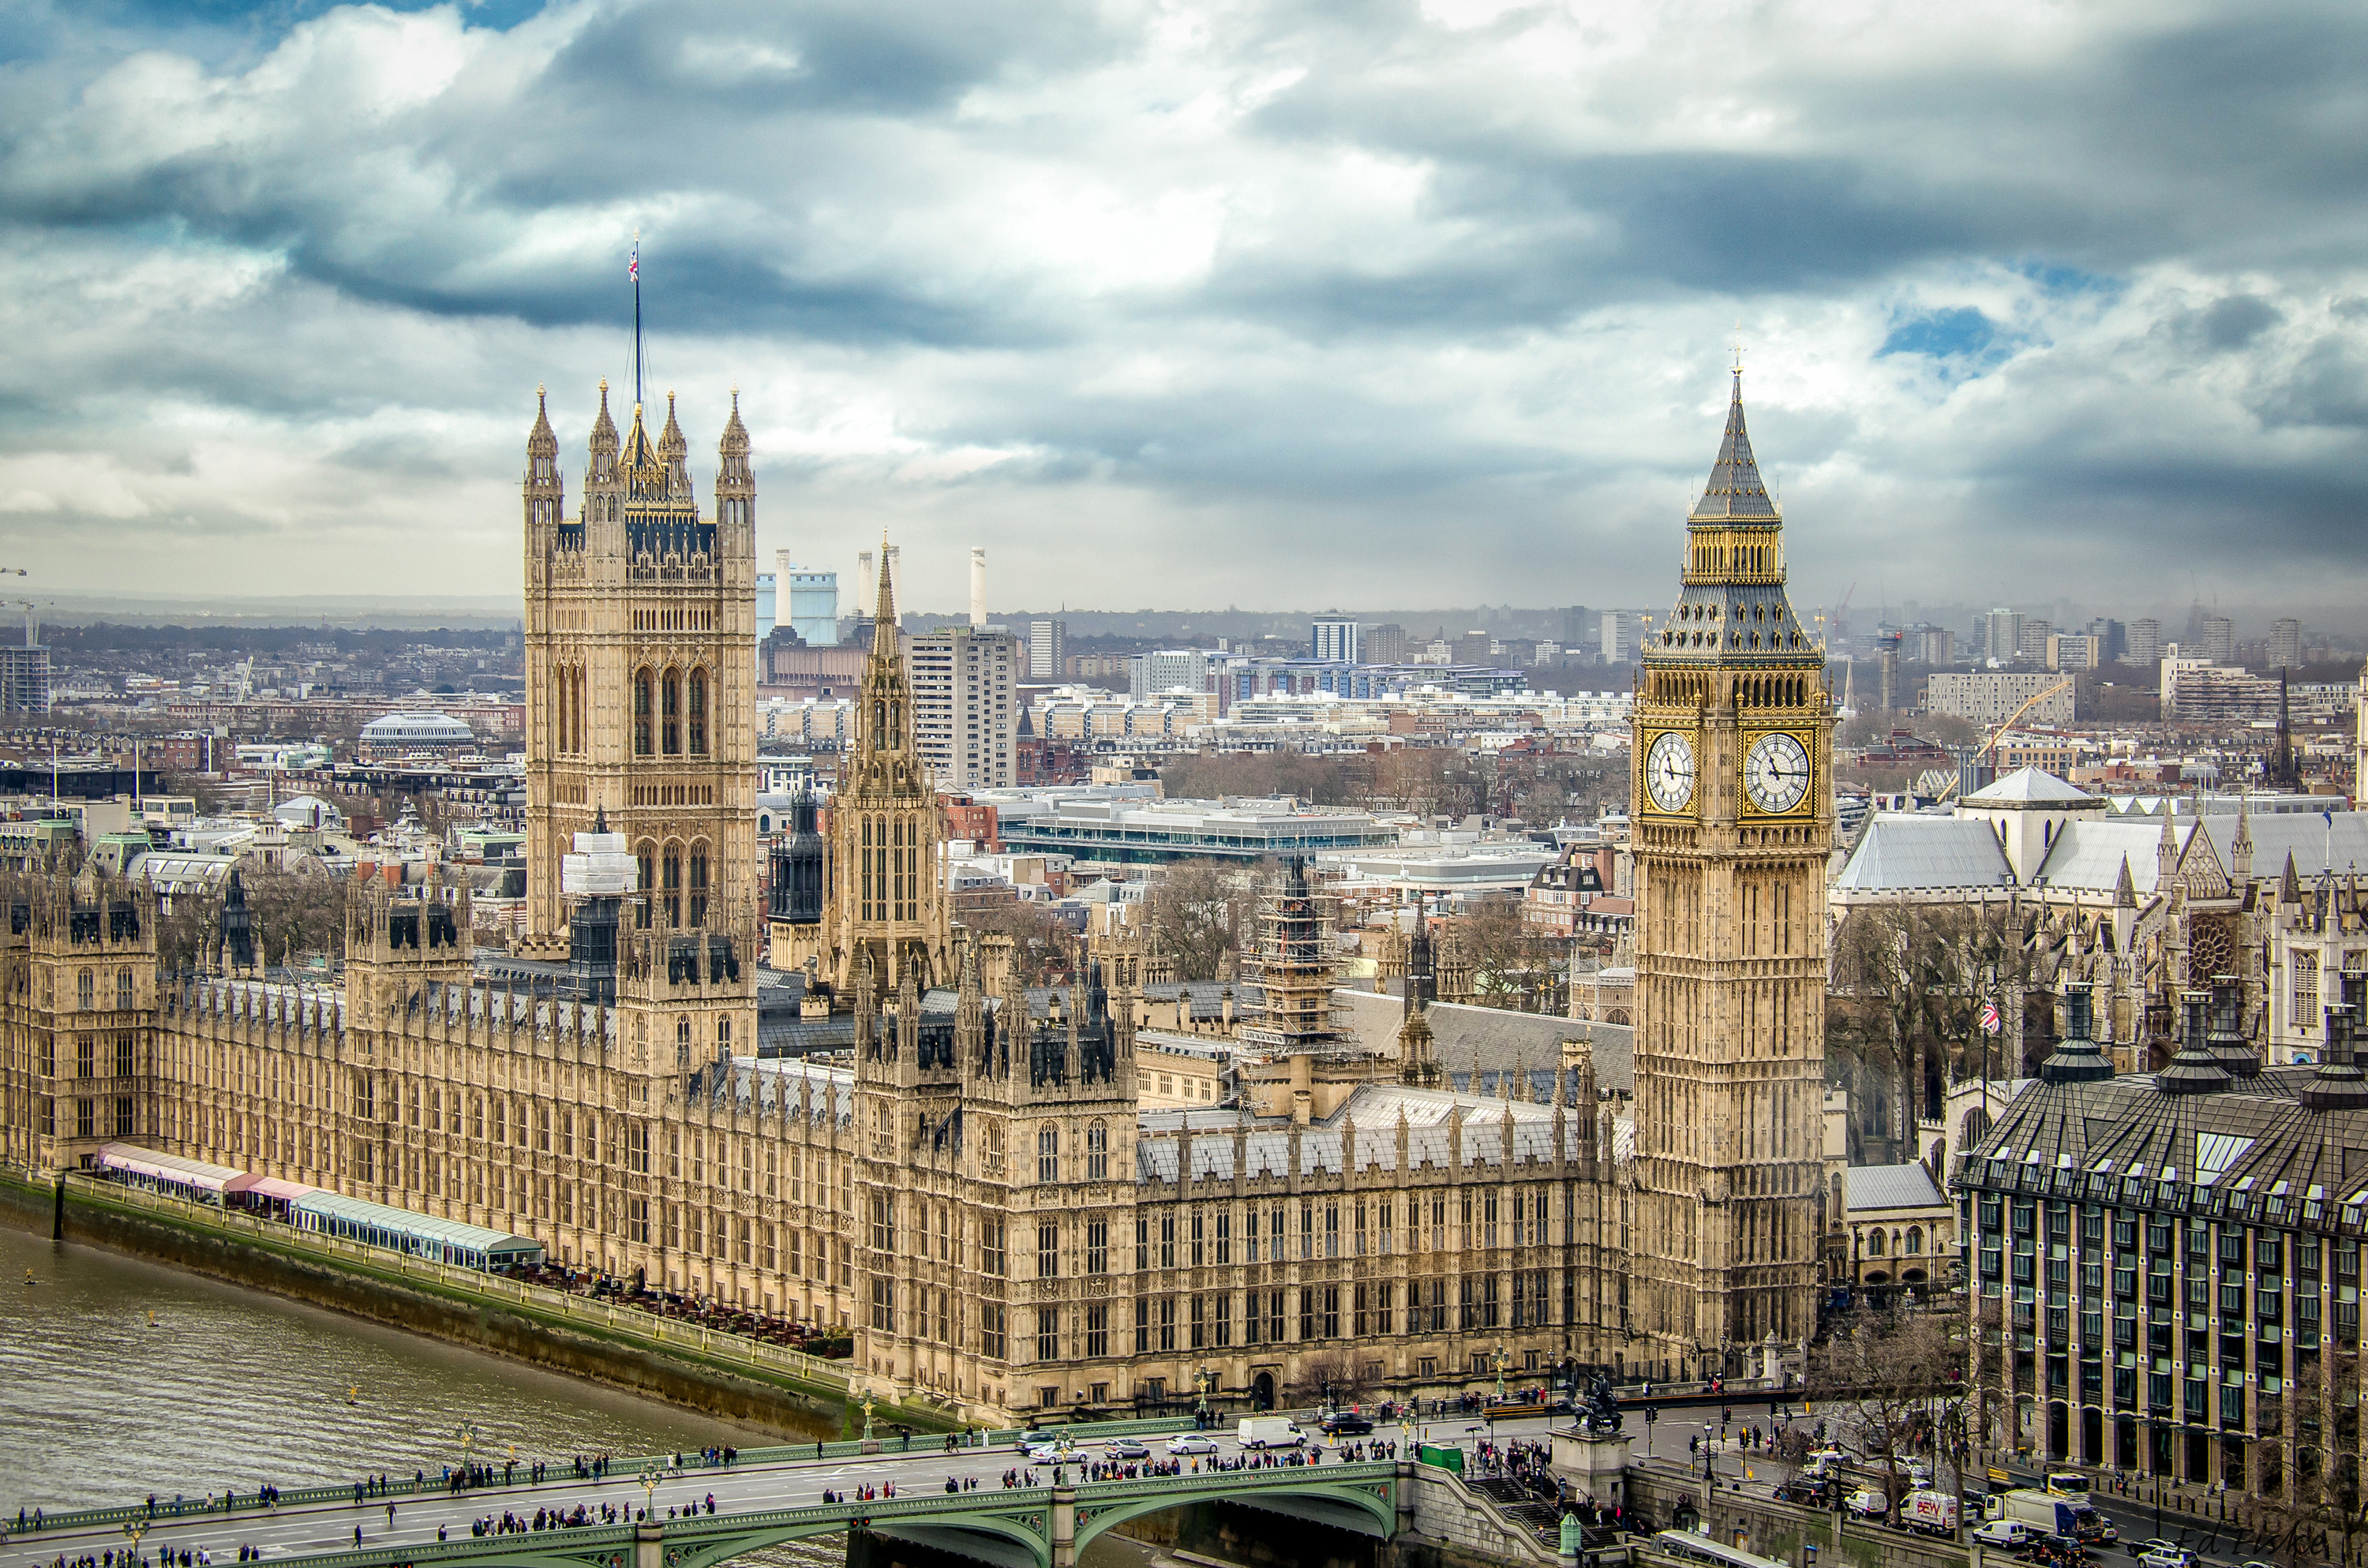 Big Ben, Houses of Parliament, London, England скачать